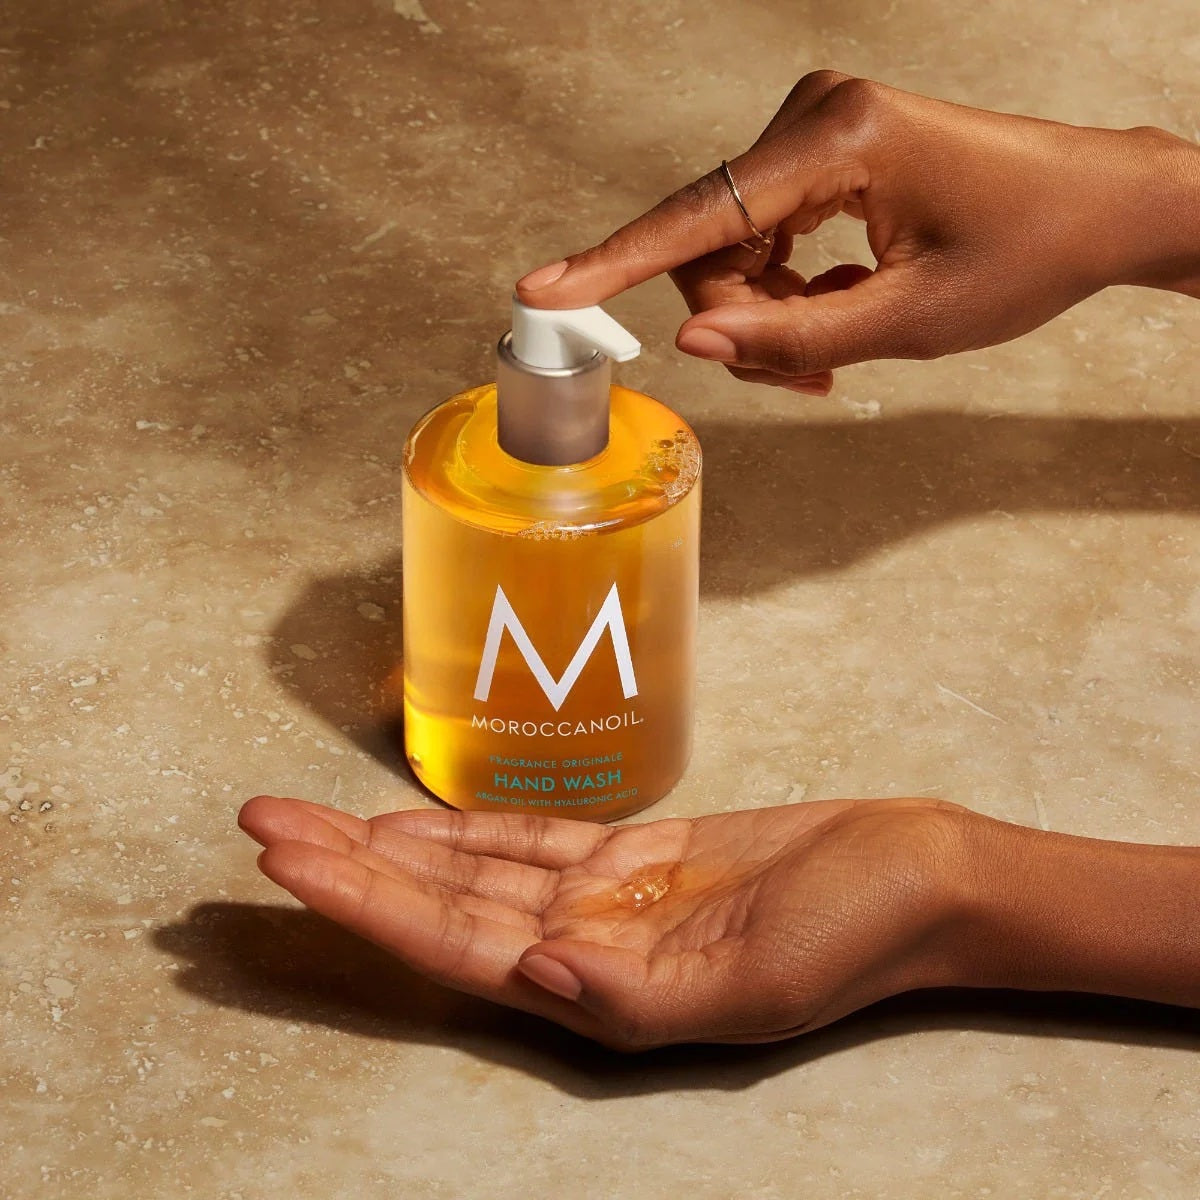 Moroccan Oil | Hand Wash ∙ Fragrance Originale